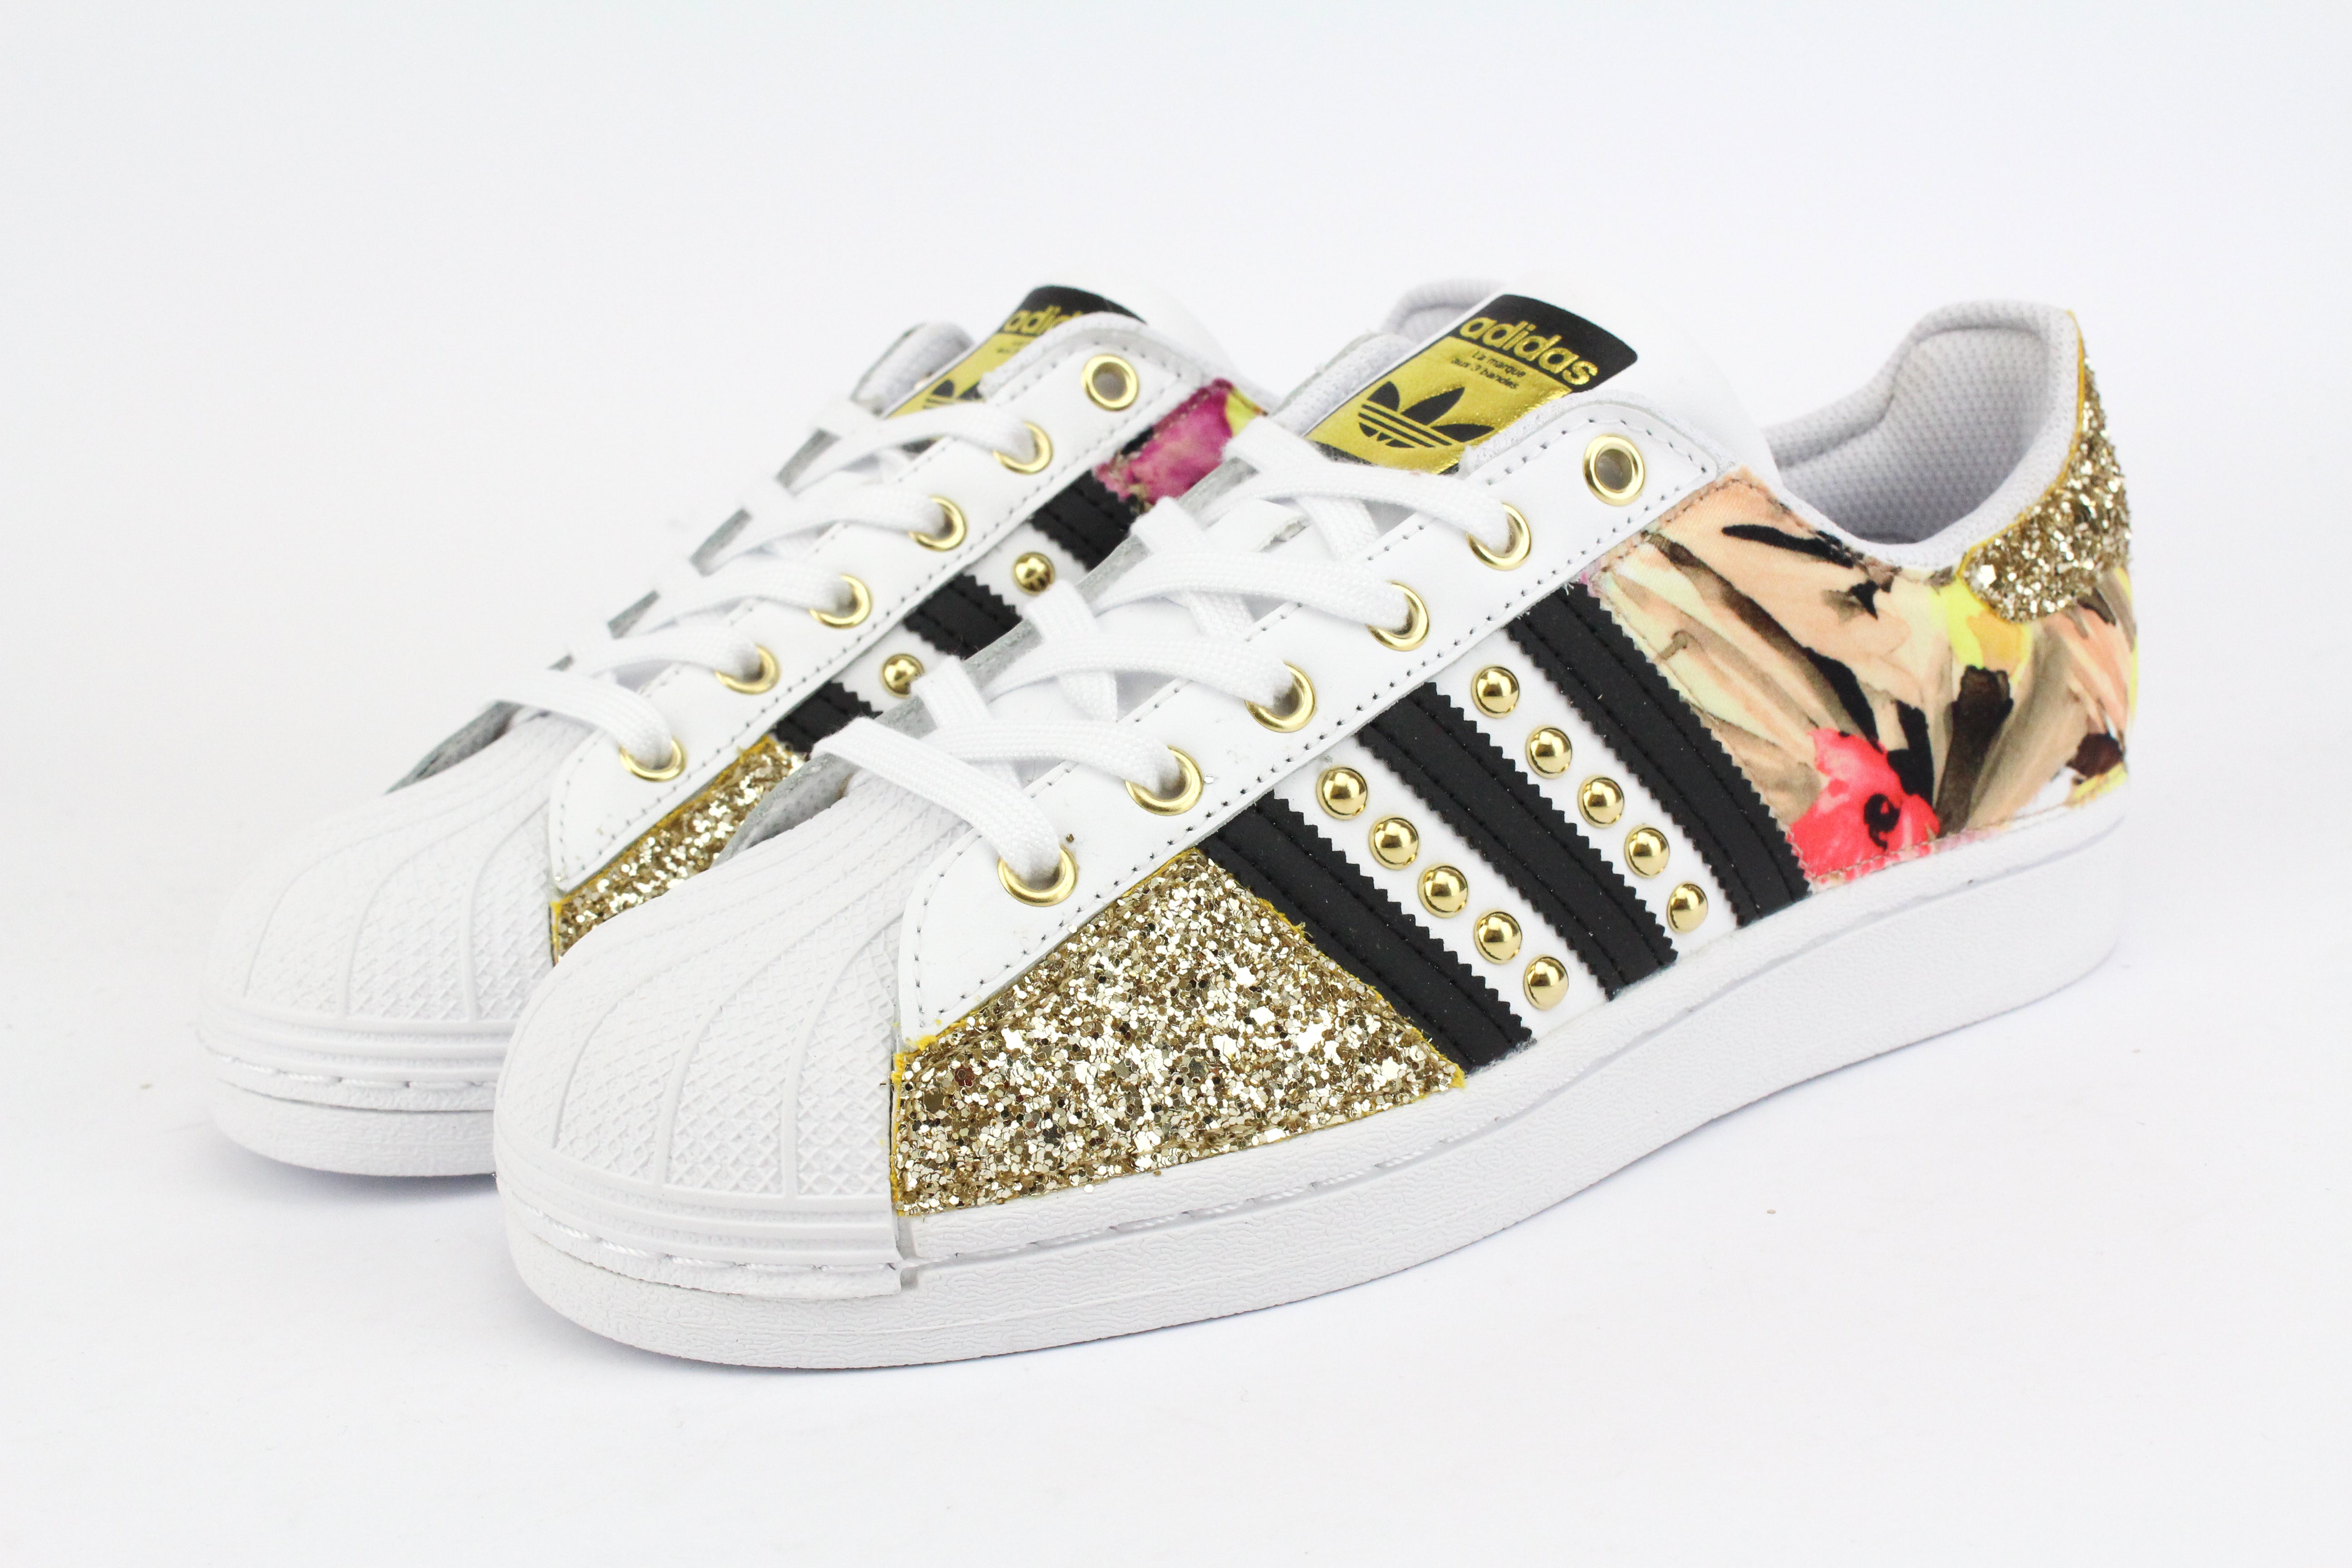 Adidas Superstar Fiori Gold 2 Glitter & Borchie